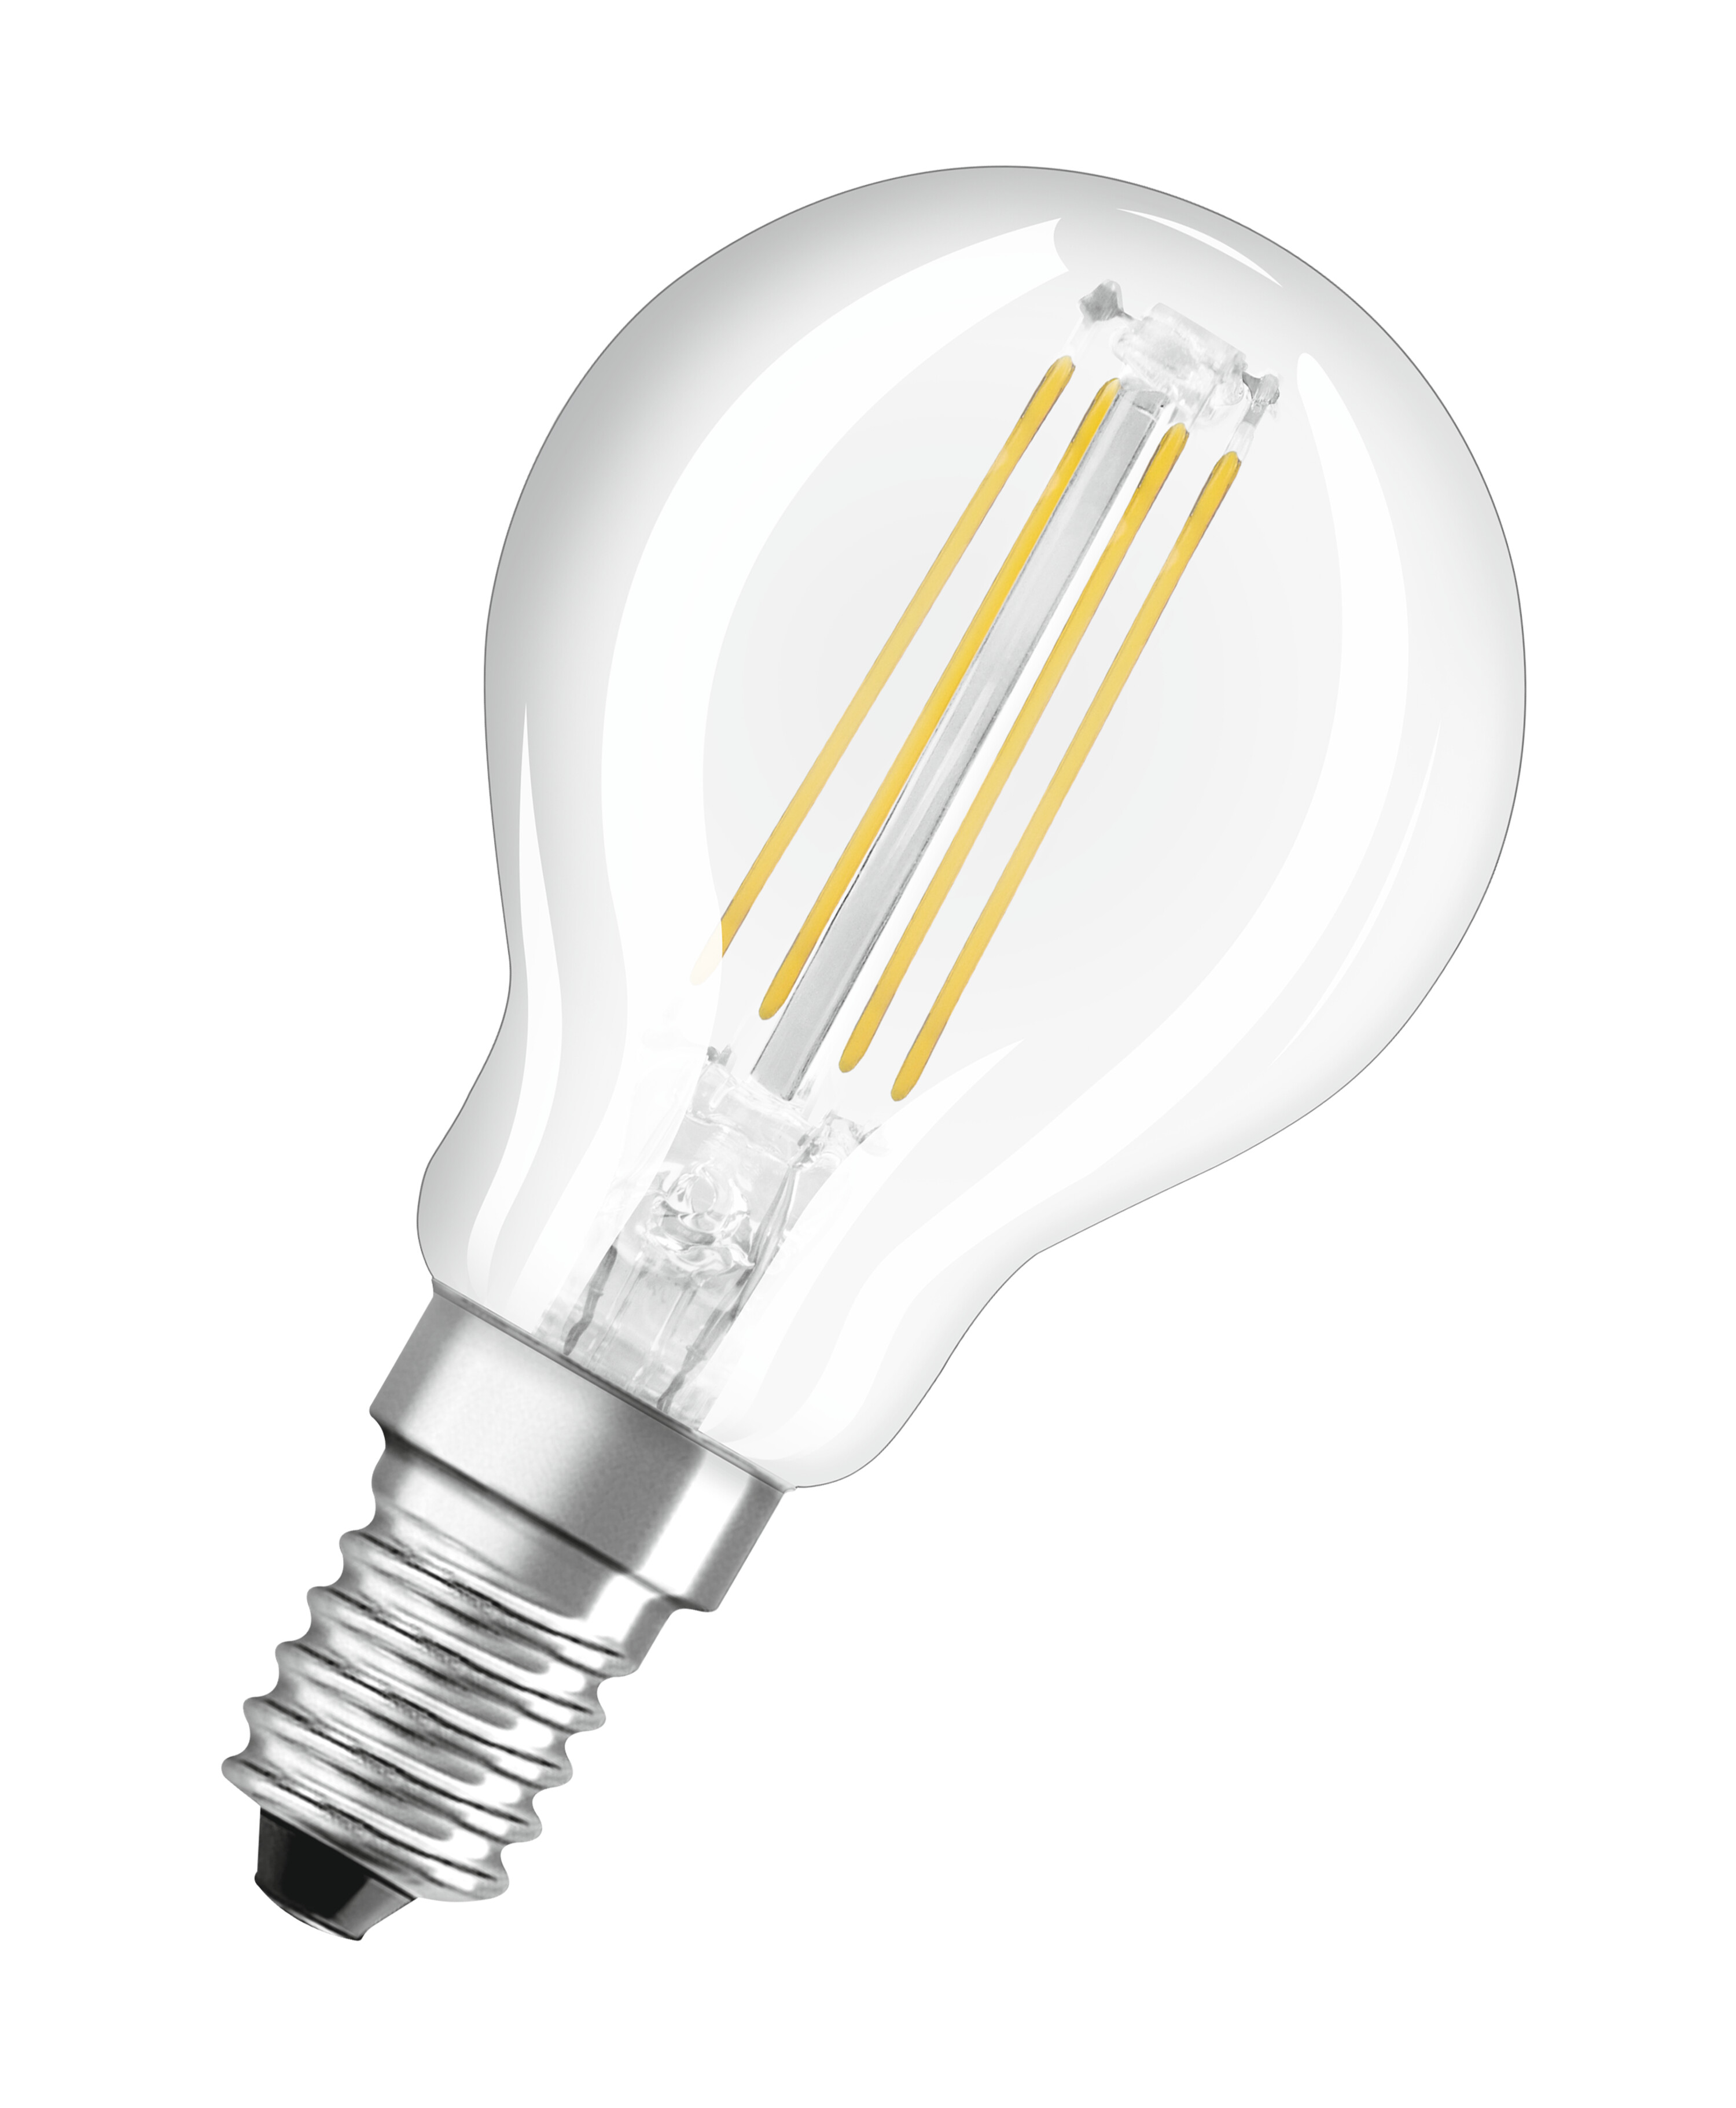 Lumen Lampe FILAMENT CLASSIC SUPERSTAR OSRAM  470 Warmweiß P LED LED PLUS